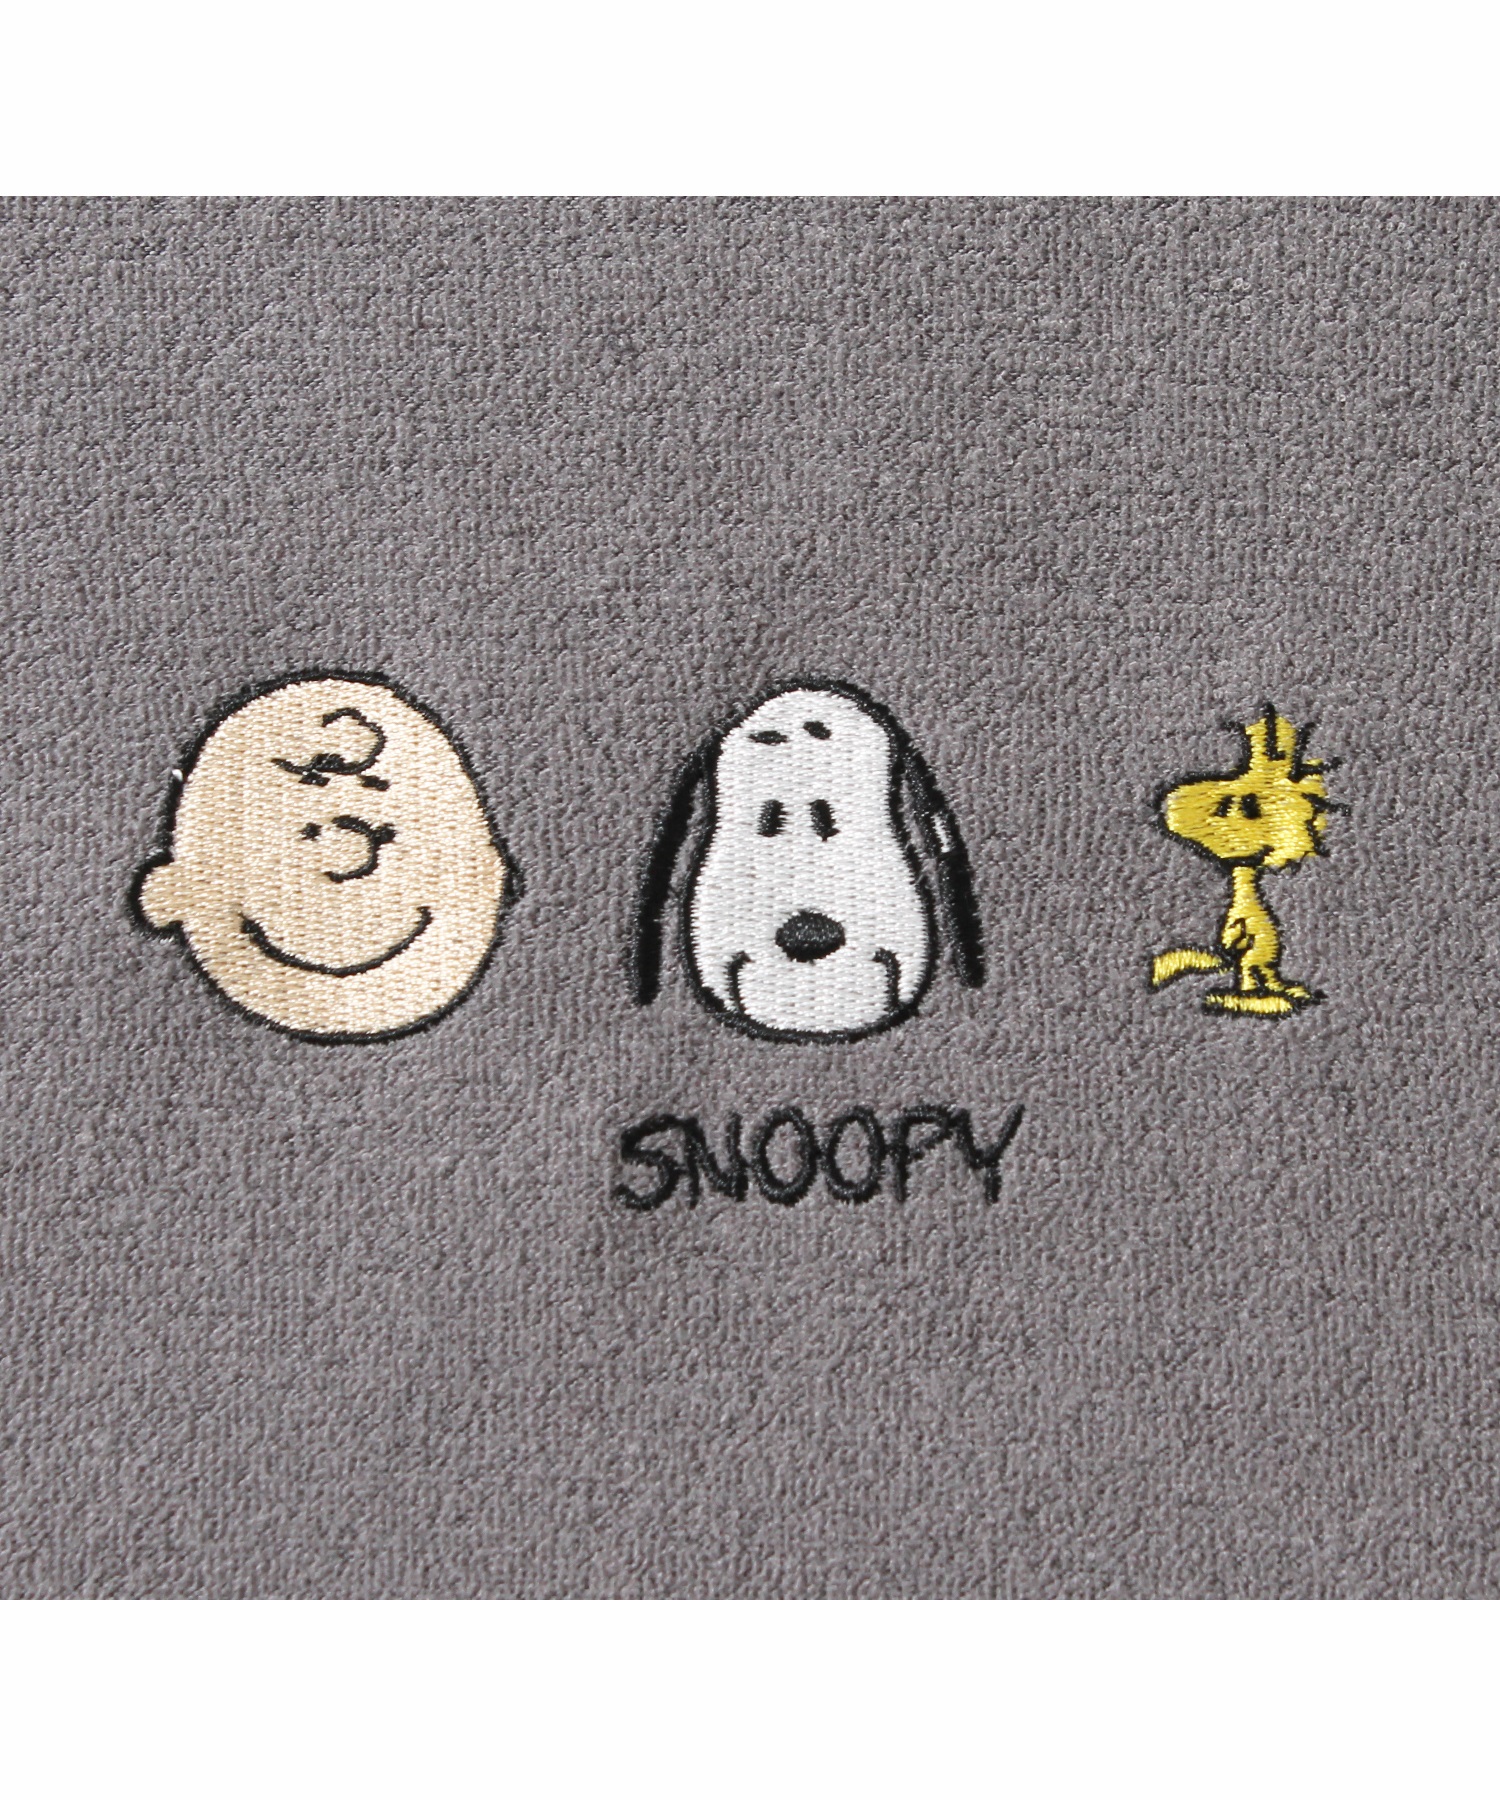 Snoopy スヌーピーと仲間たち パイル地ワンピース ルームウェア Hi Online Store